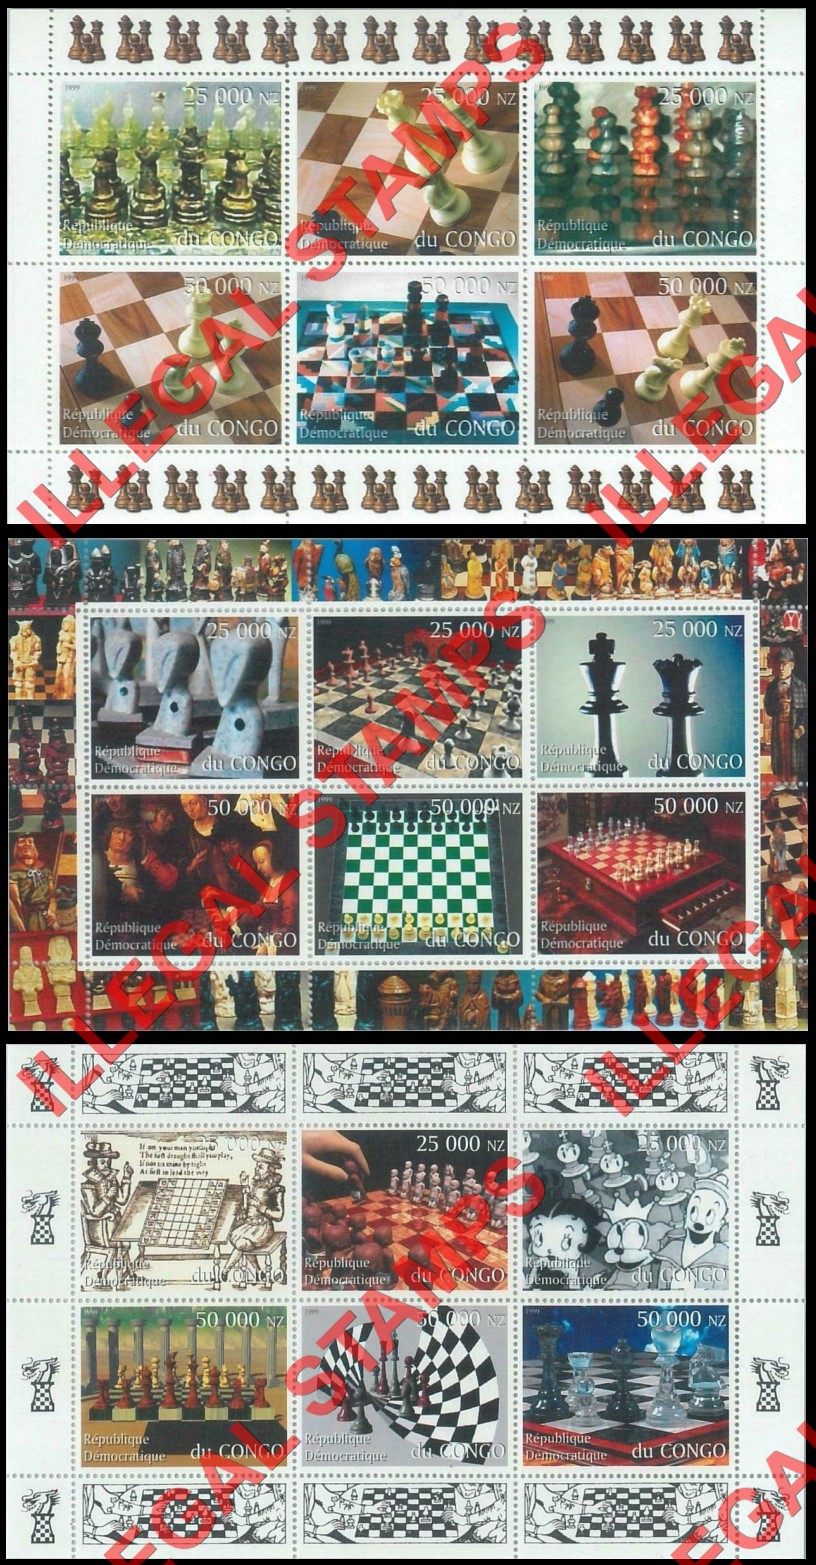 Congo Democratic Republic 1999 Chess Illegal Stamp Souvenir Sheets of 6